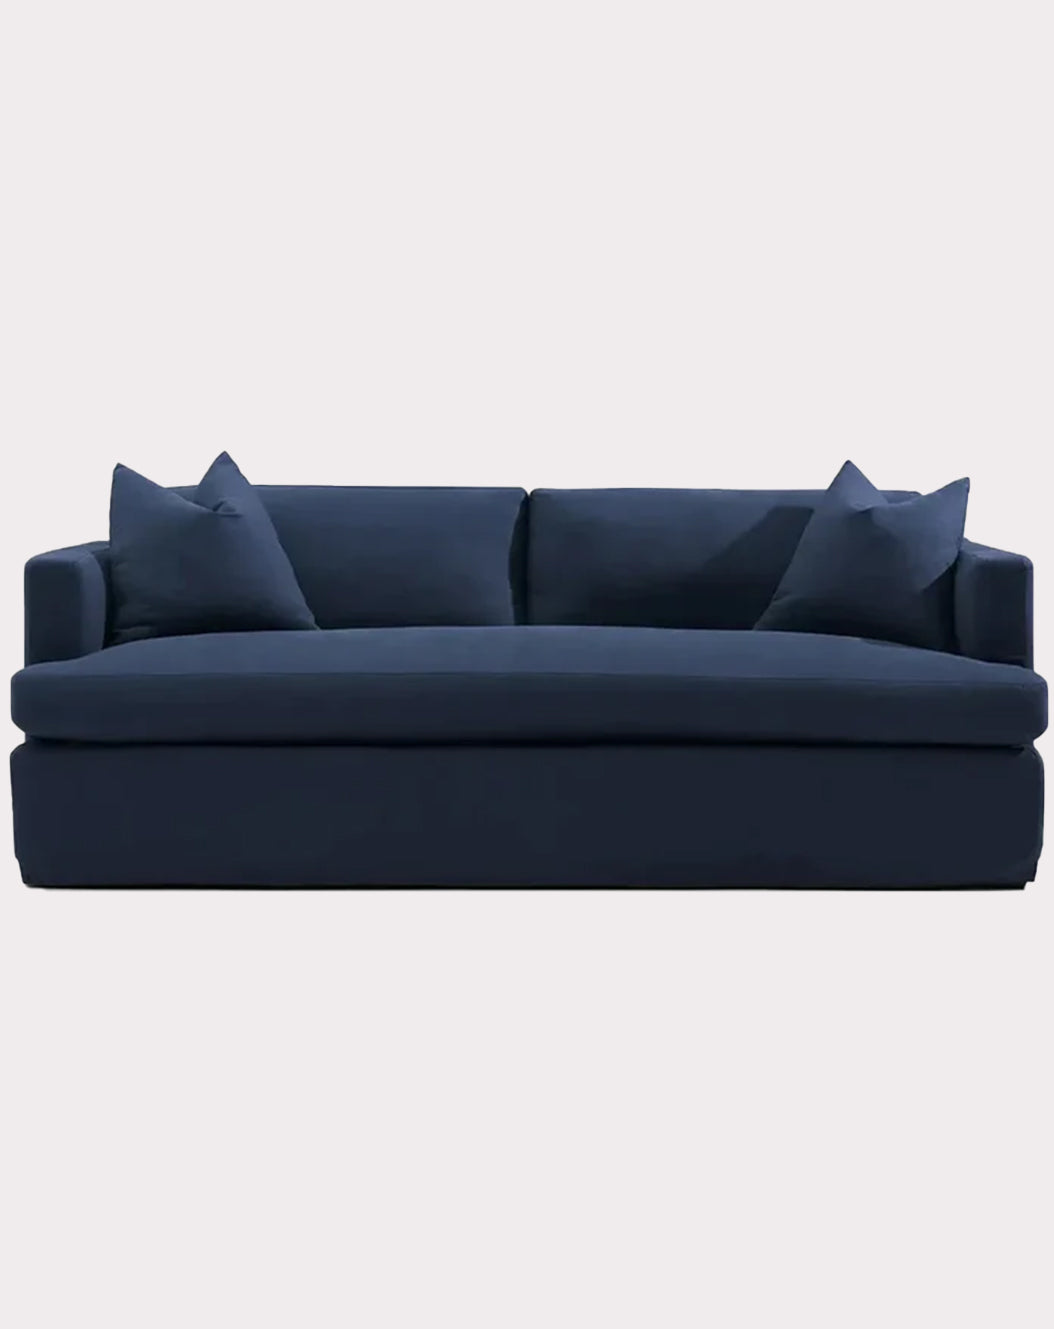 Burleigh 3 Seater Slip Navy Cover Sofa